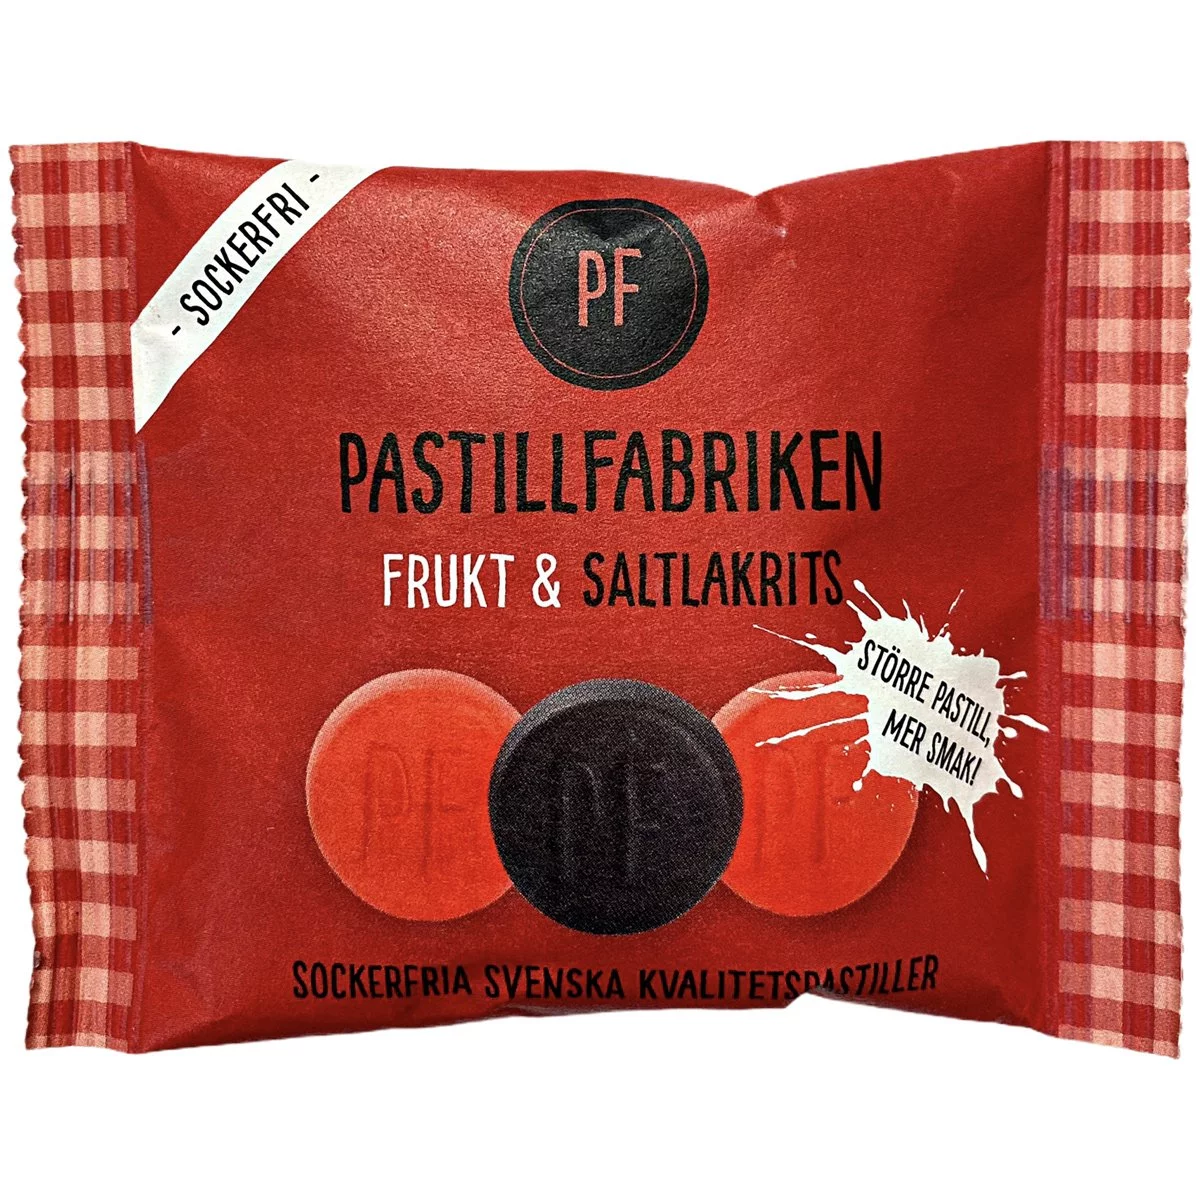 Pastillfabriken Frukt & Saltlakrits (FRUCHT- & SALZLAKRITZ) (25g) 1